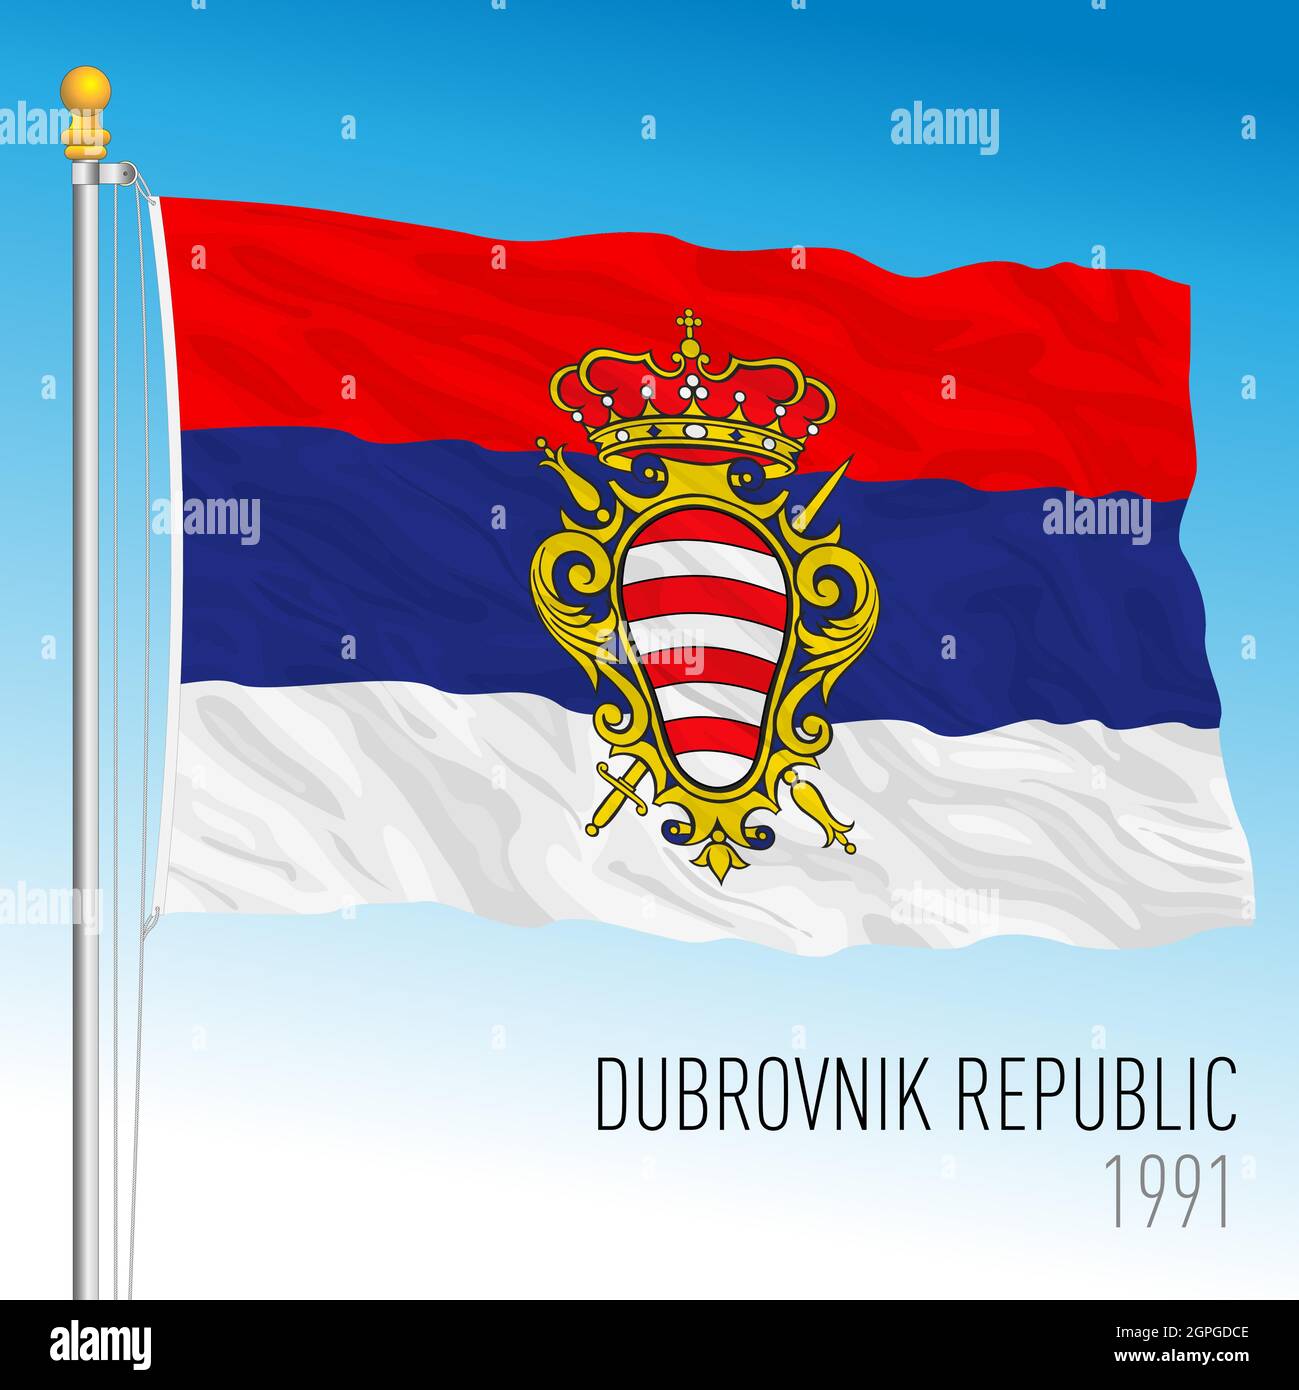 Dubrovnik Republic historical flag, Croatia, Europe, 1991 Stock Vector